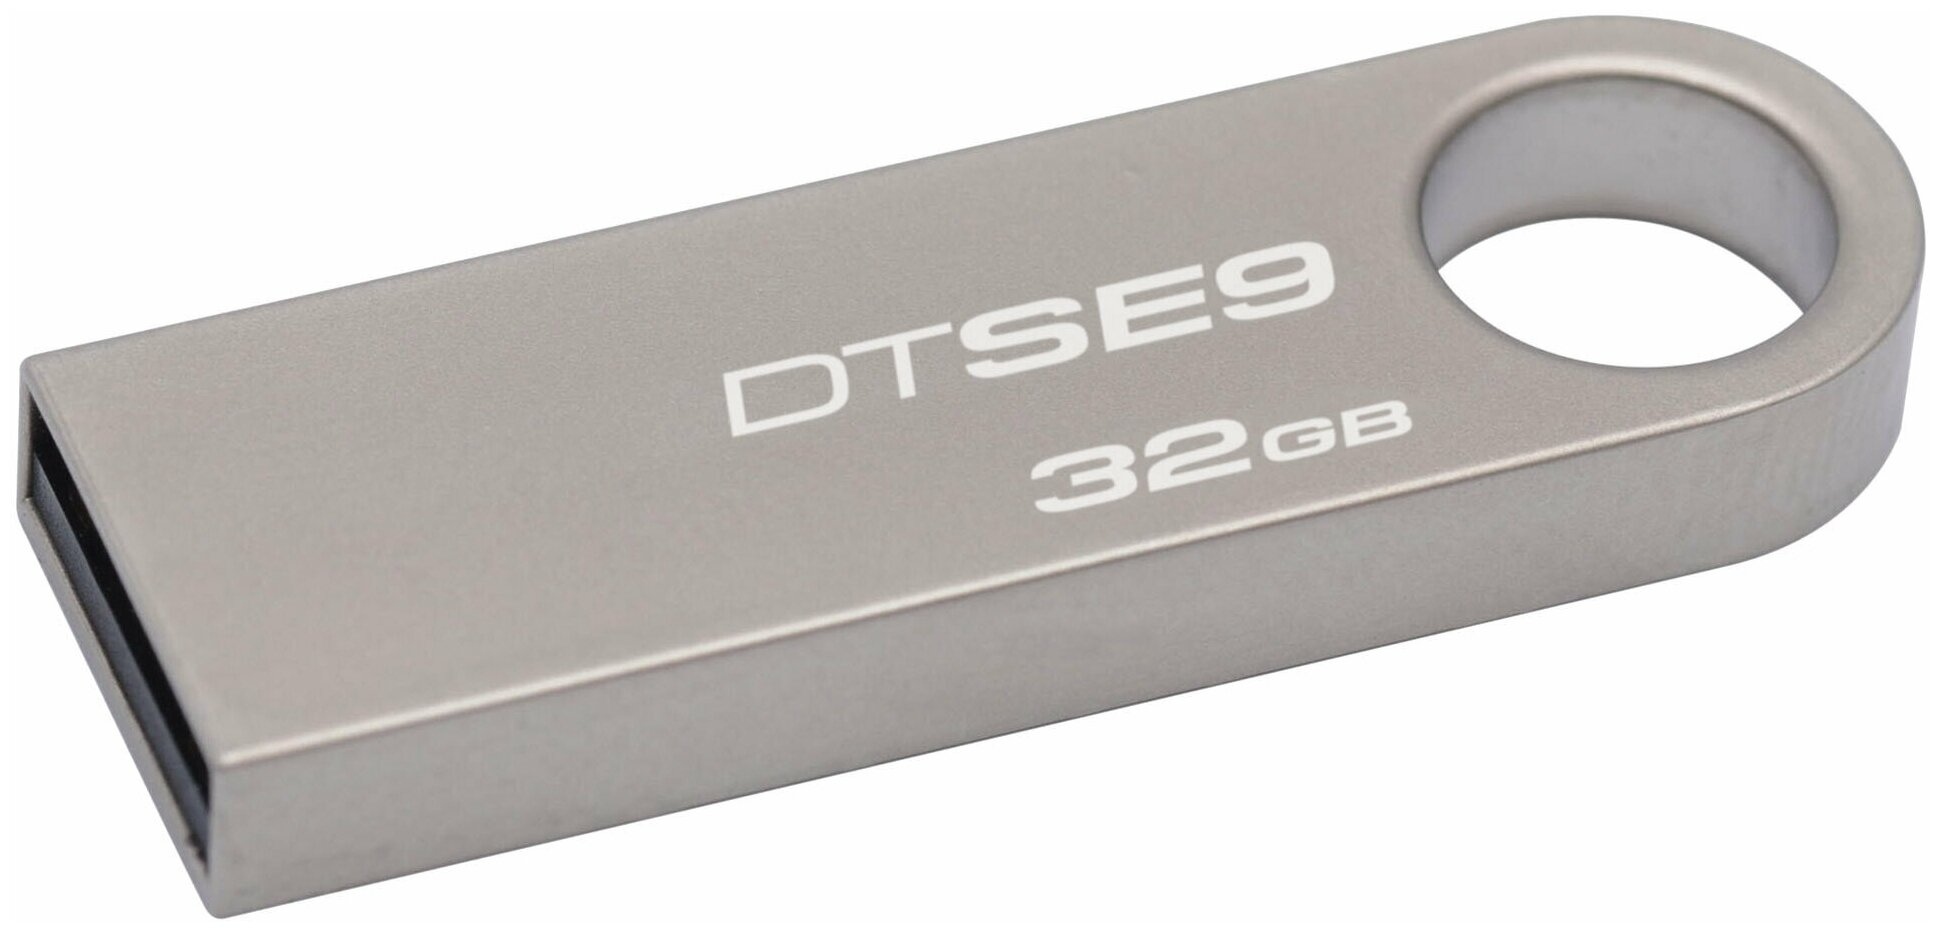 USB-накопитель Kingston DataTraveler SE9 32GB